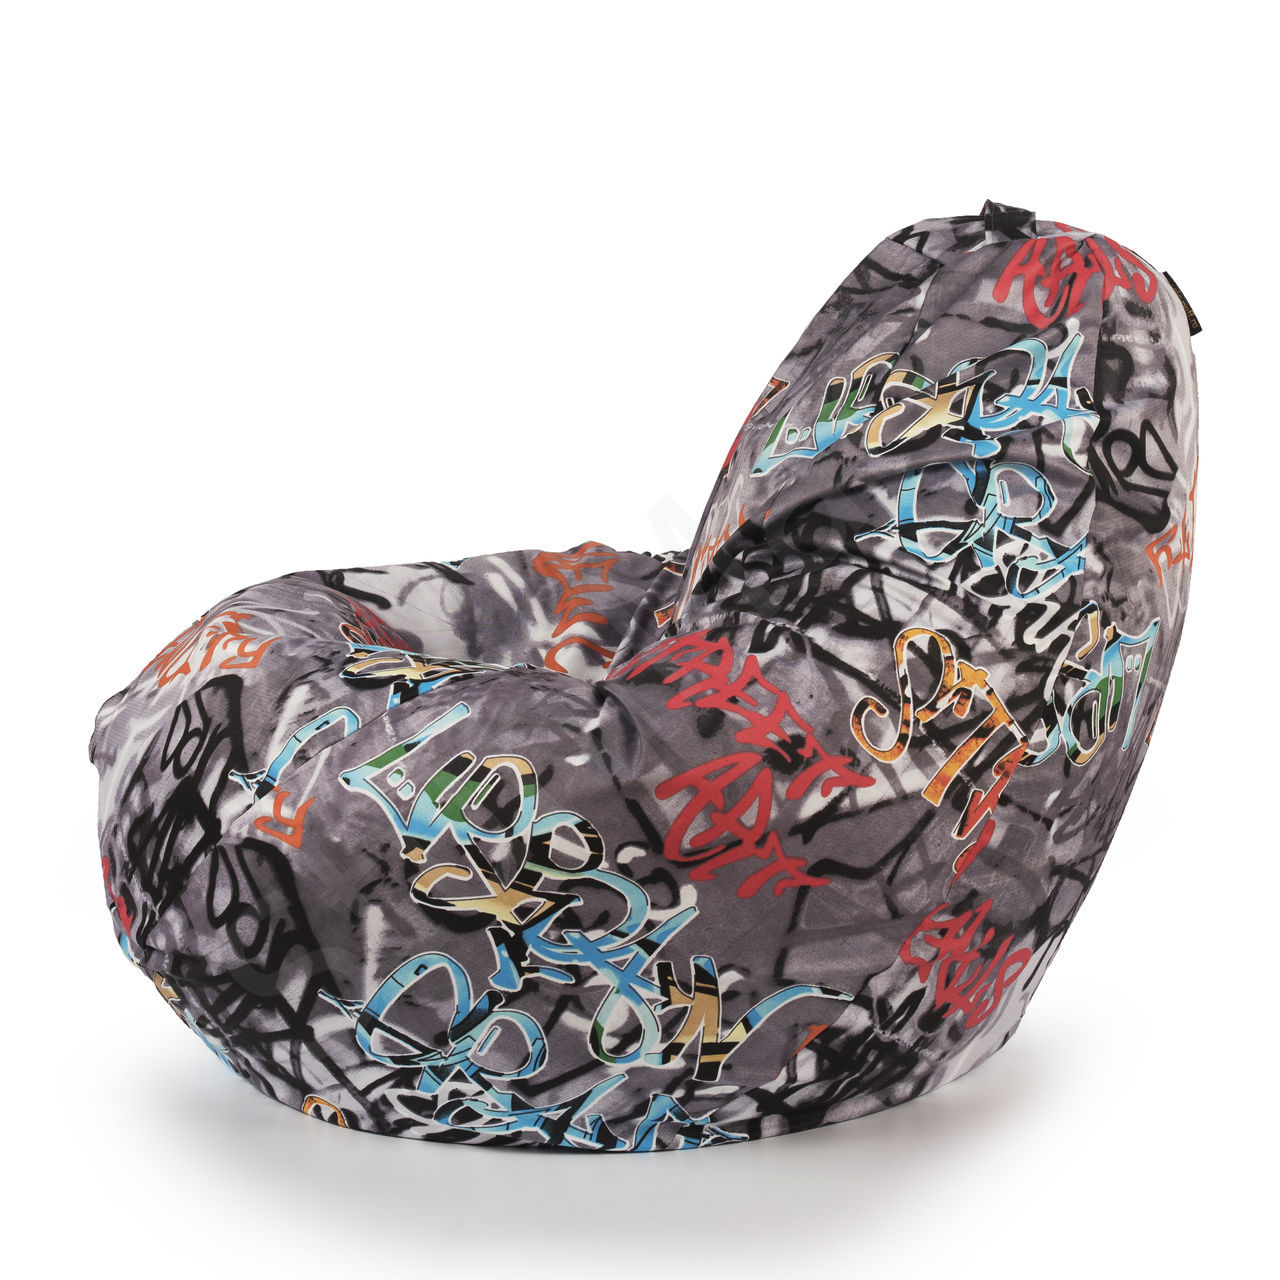  Бескаркасное кресло-мешок Graffiti L 5537